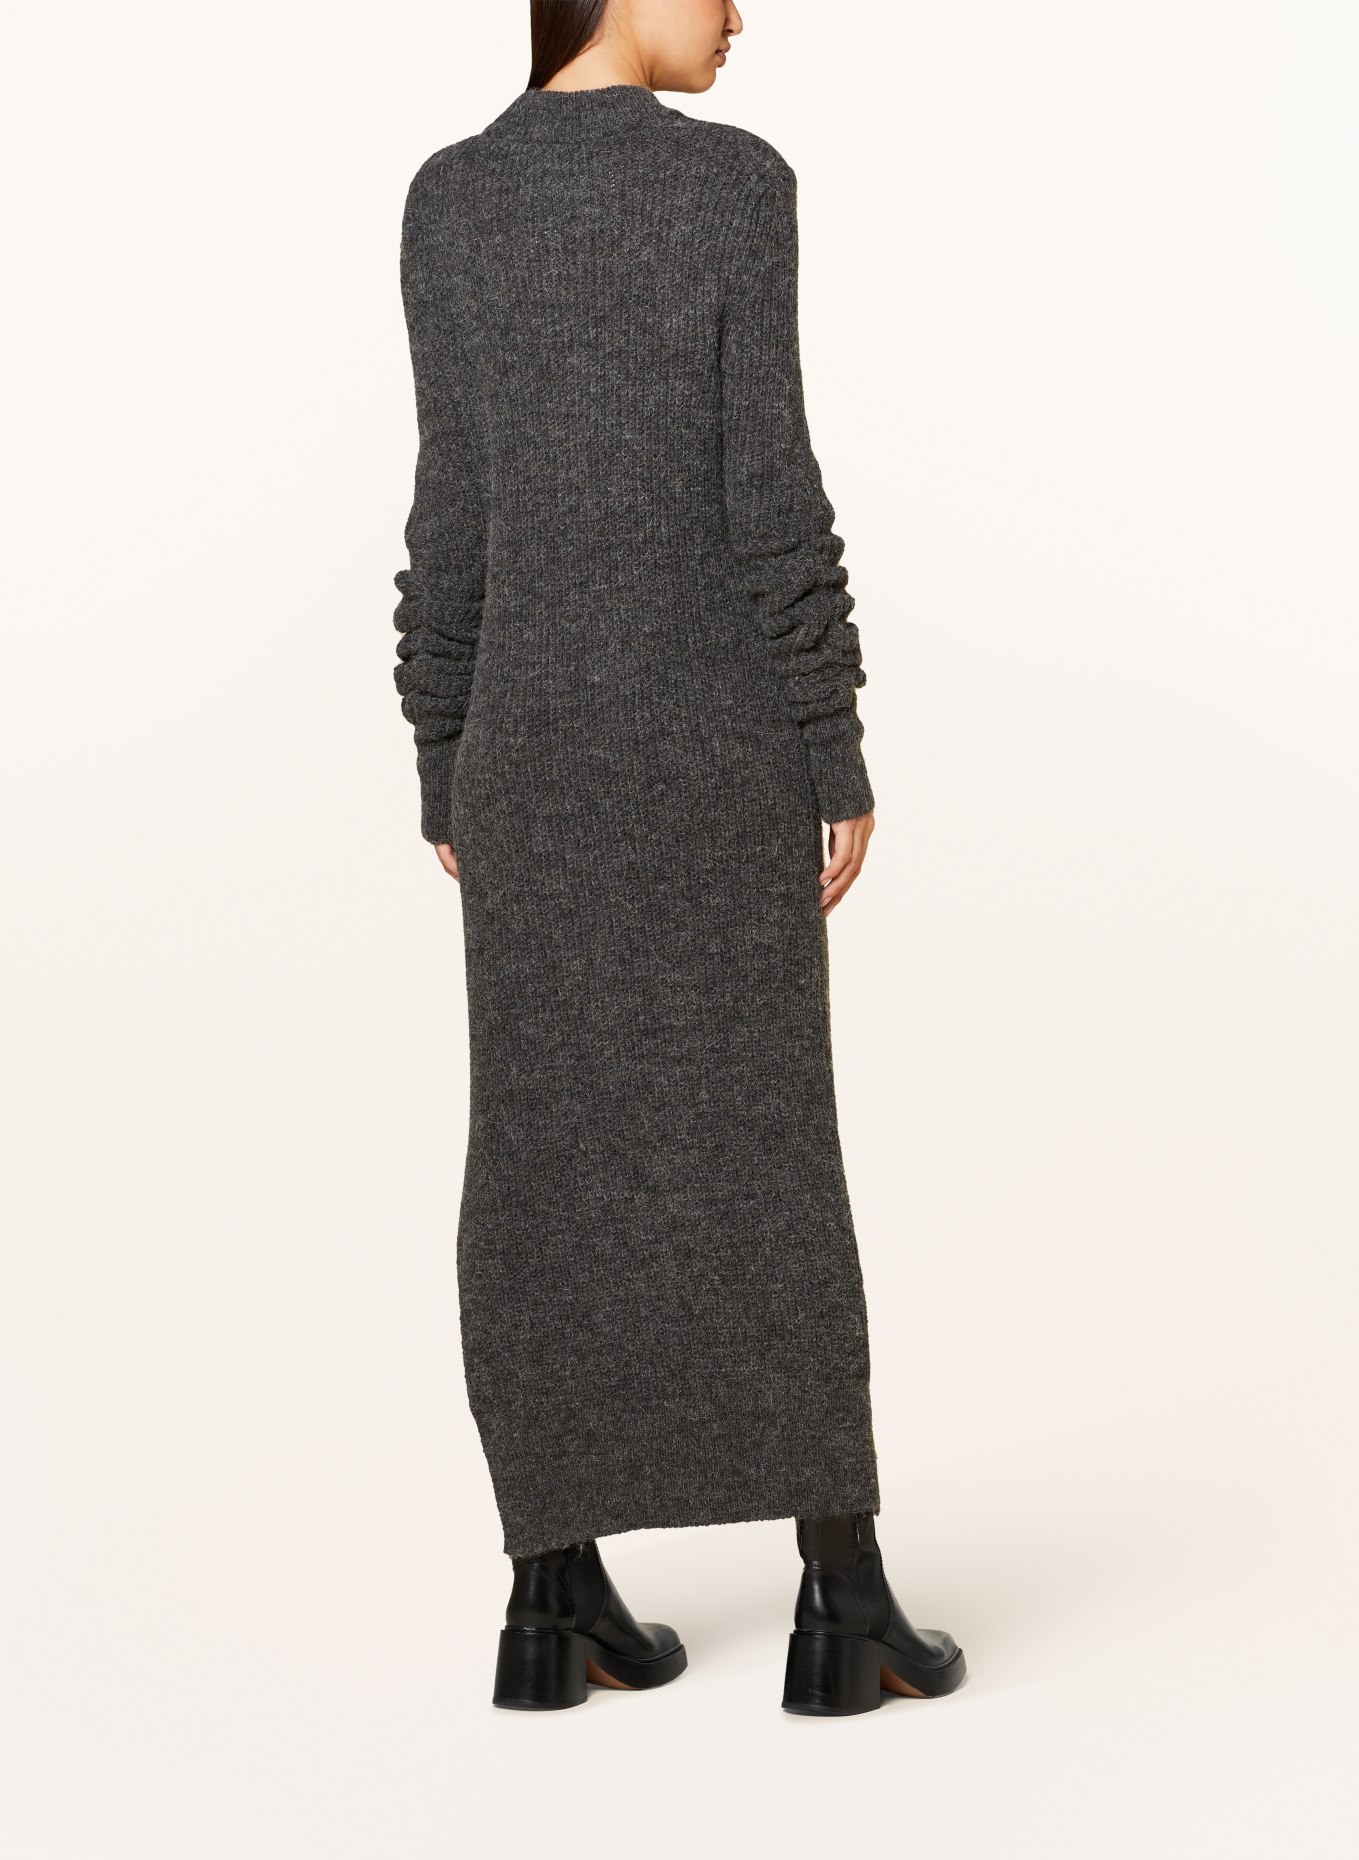 VANILIA Knit dress with alpaca, Color: GRAY (Image 3)